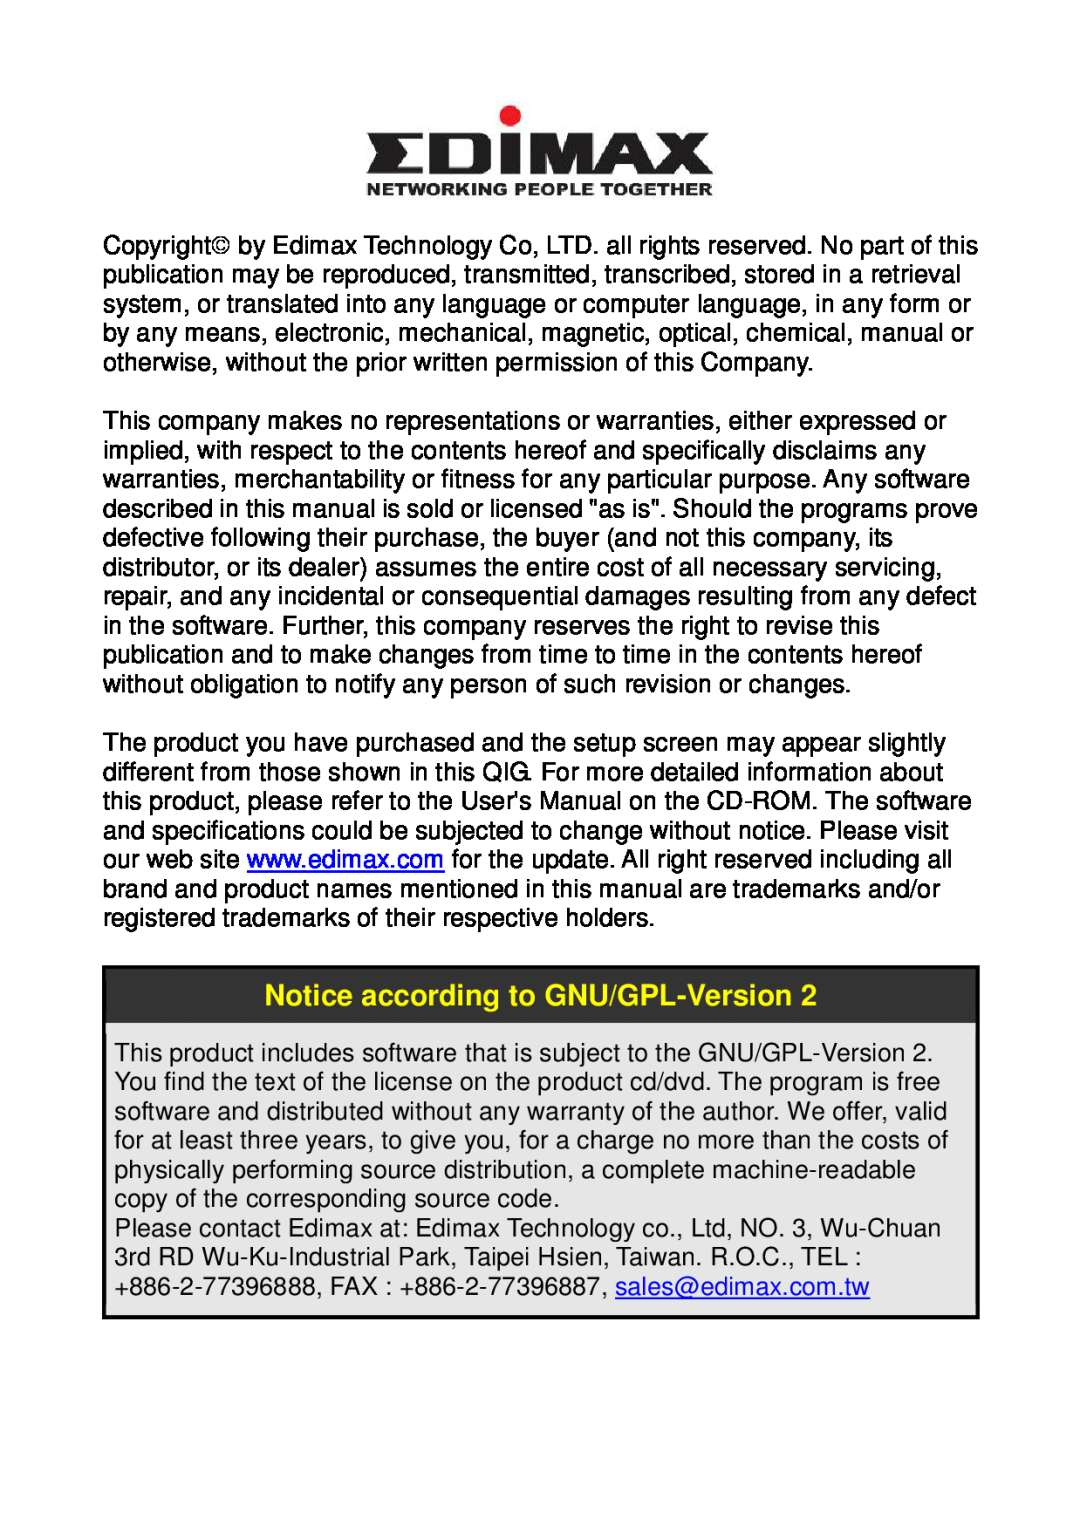 Edimax Technology IC-9000 manual Notice according to GNU/GPL-Version 